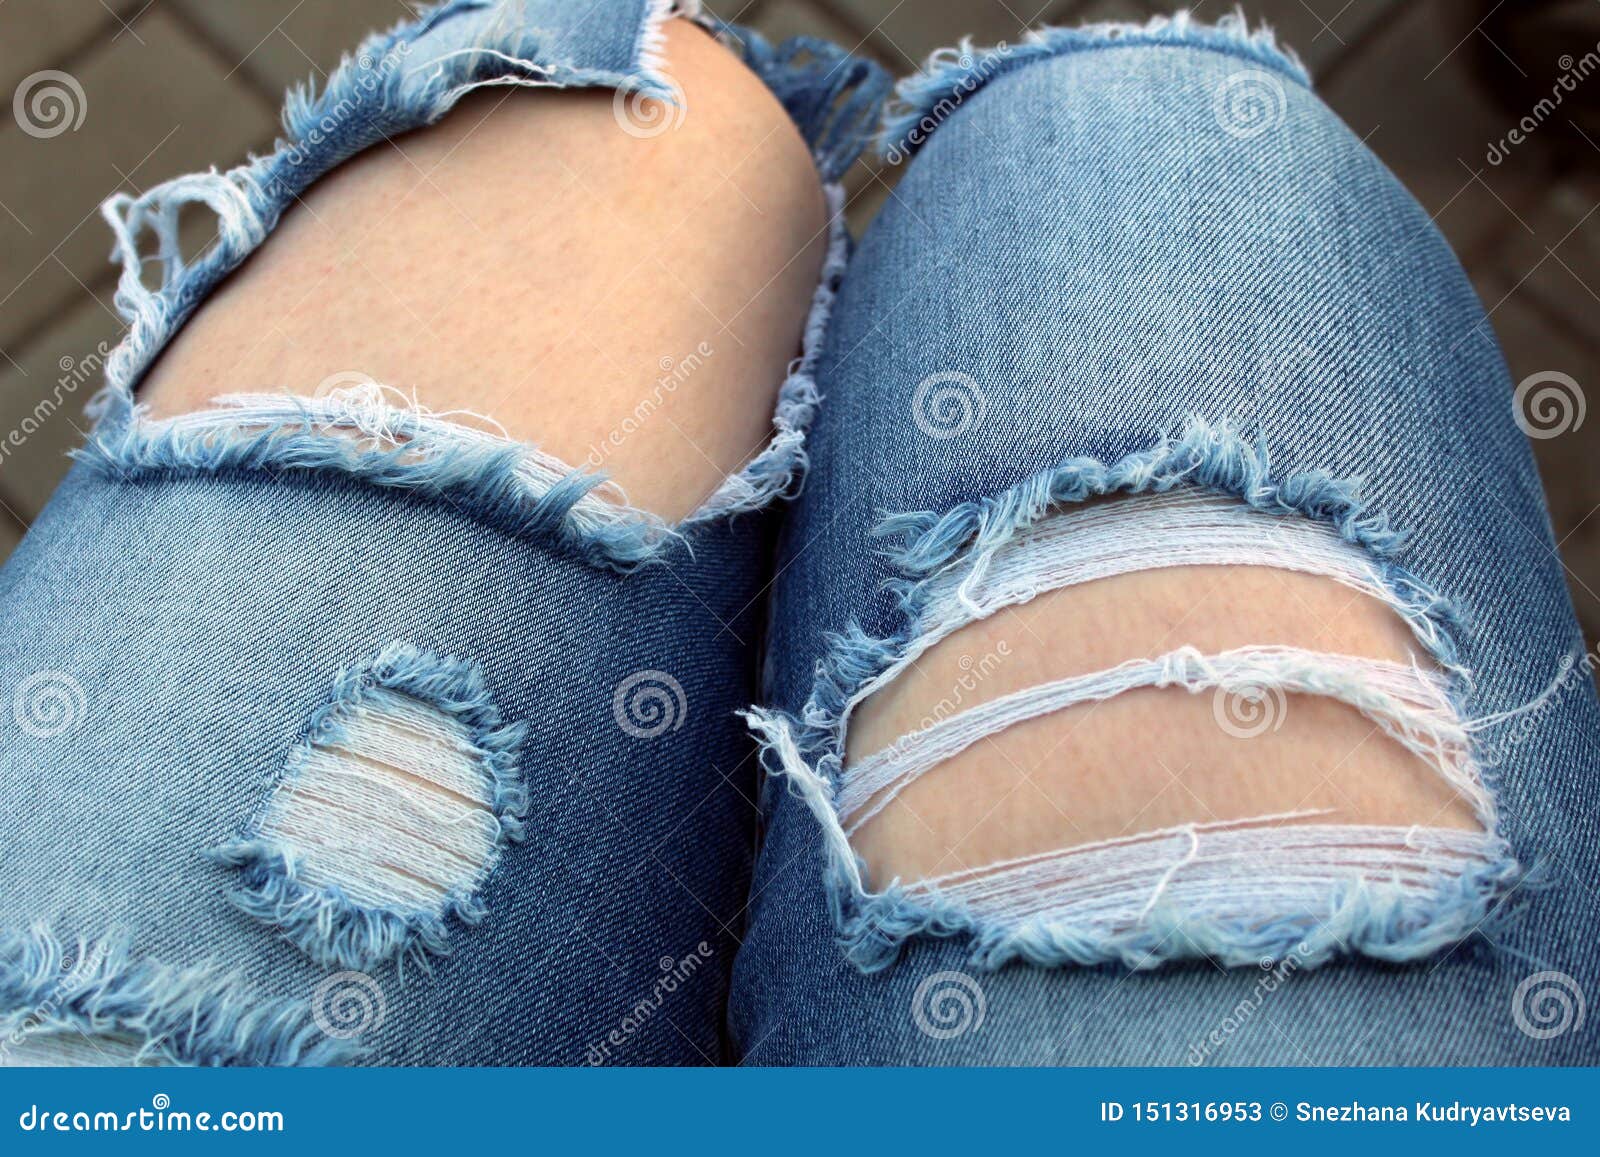 jeans pant cutting design